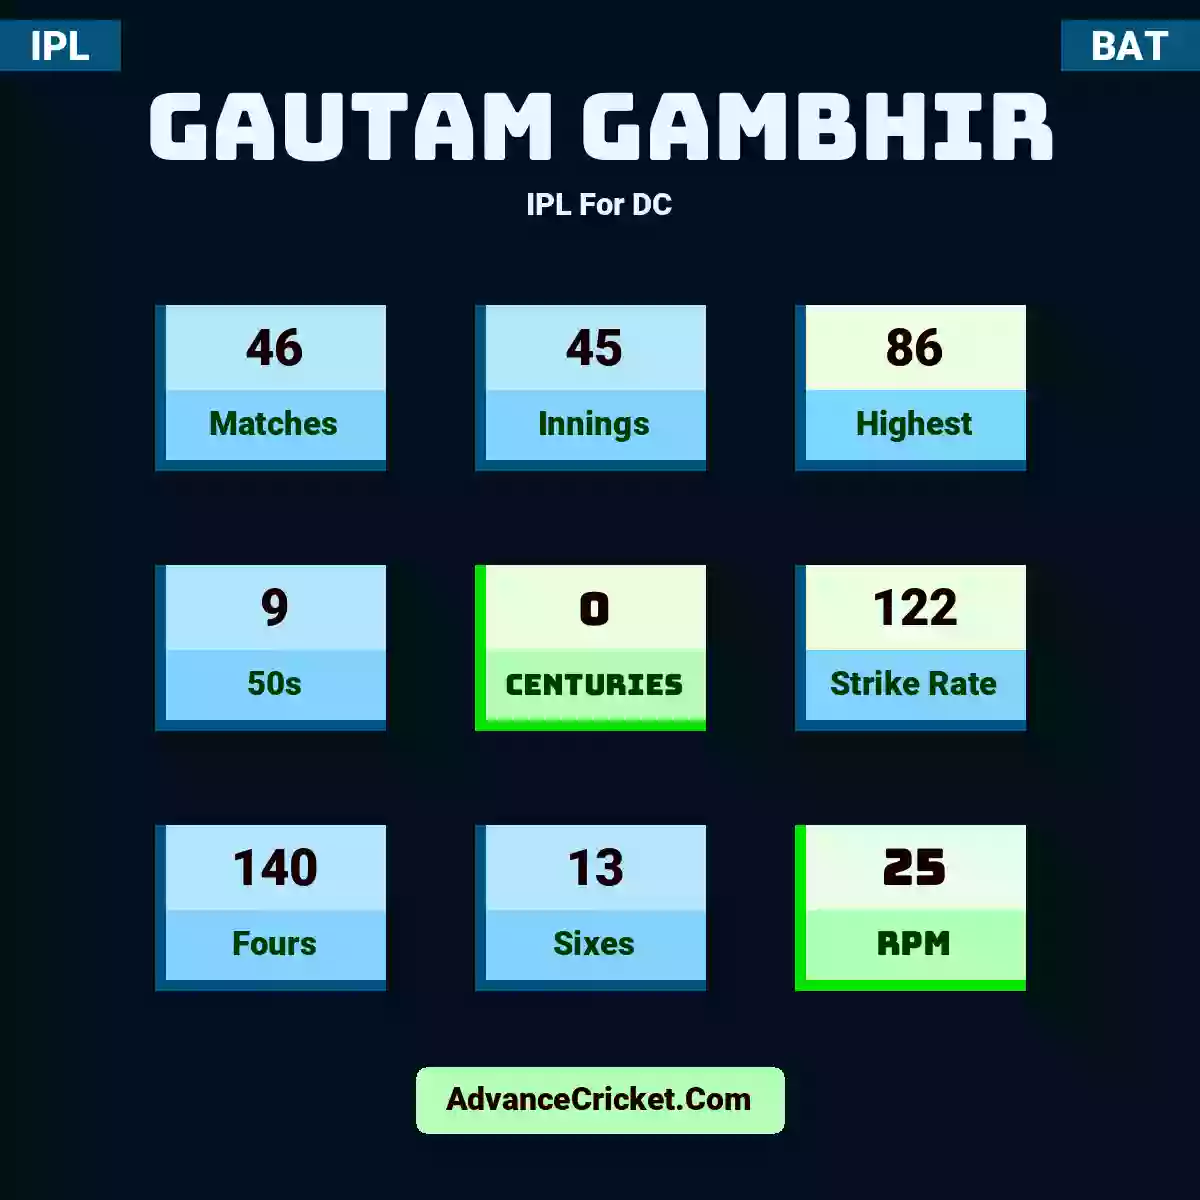 Gautam Gambhir IPL  For DC, Gautam Gambhir played 46 matches, scored 86 runs as highest, 9 half-centuries, and 0 centuries, with a strike rate of 122. G.Gambhir hit 140 fours and 13 sixes, with an RPM of 25.